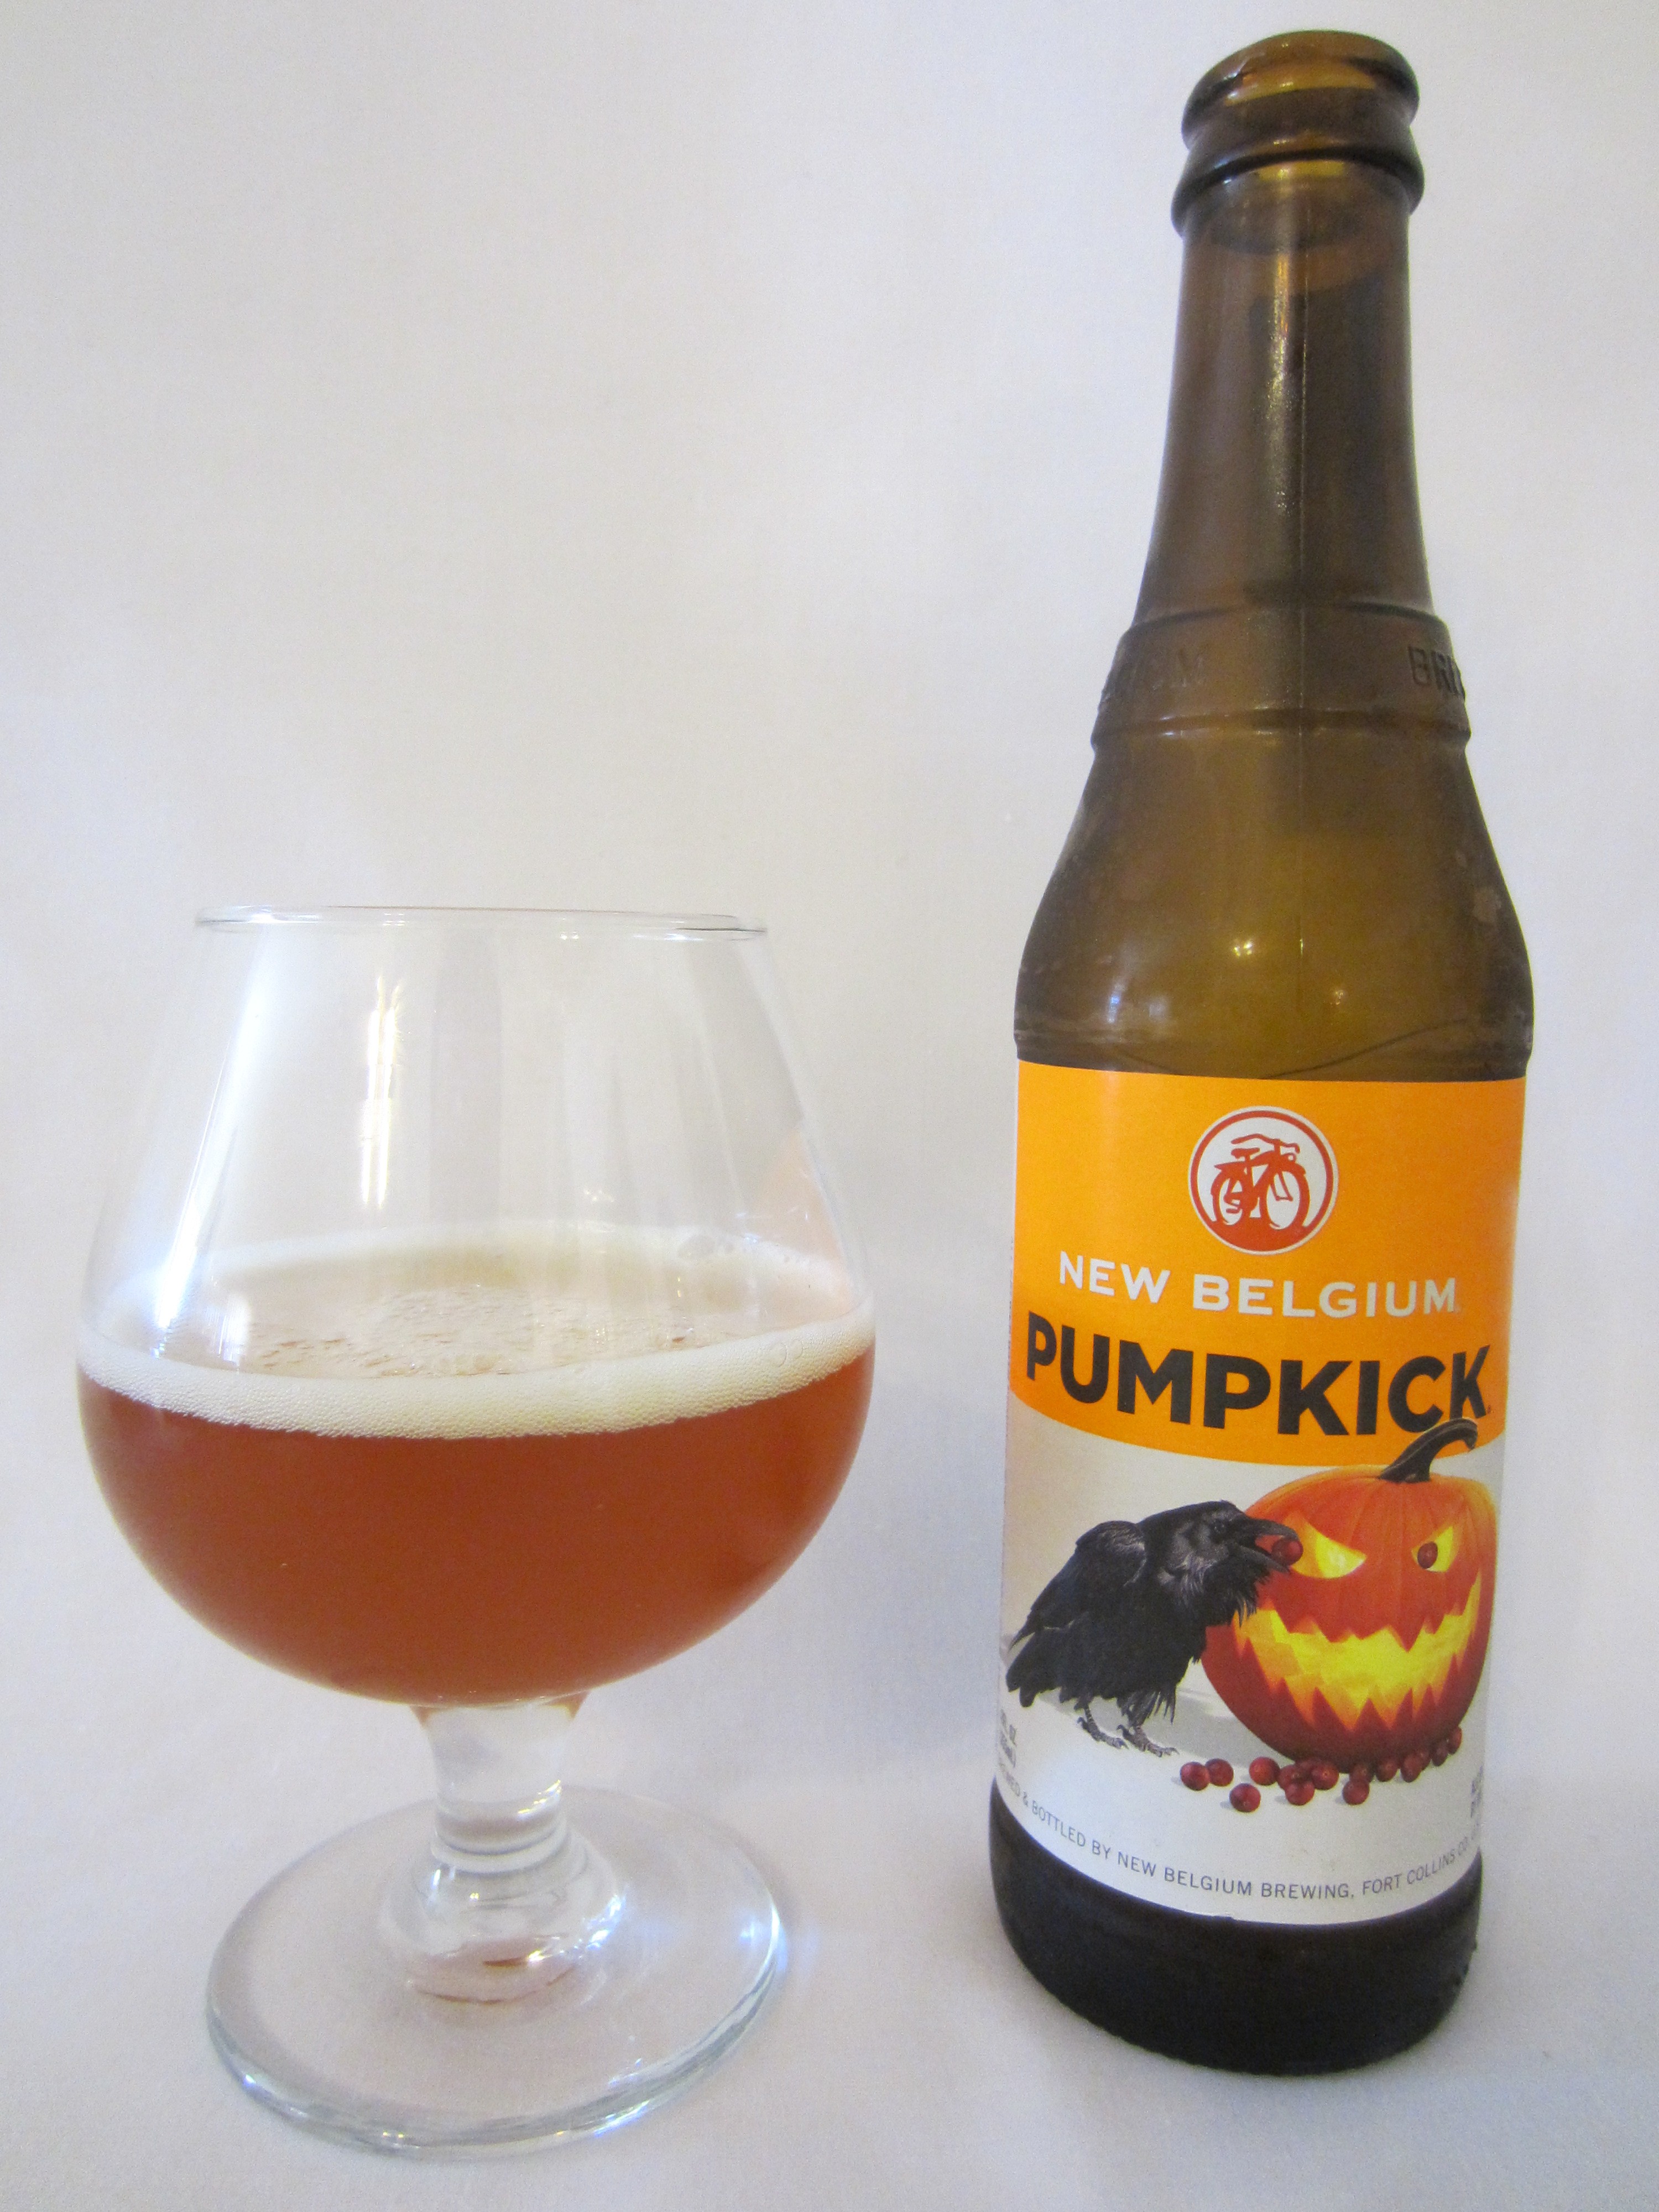 Pumpkick - New Belgium Brewing